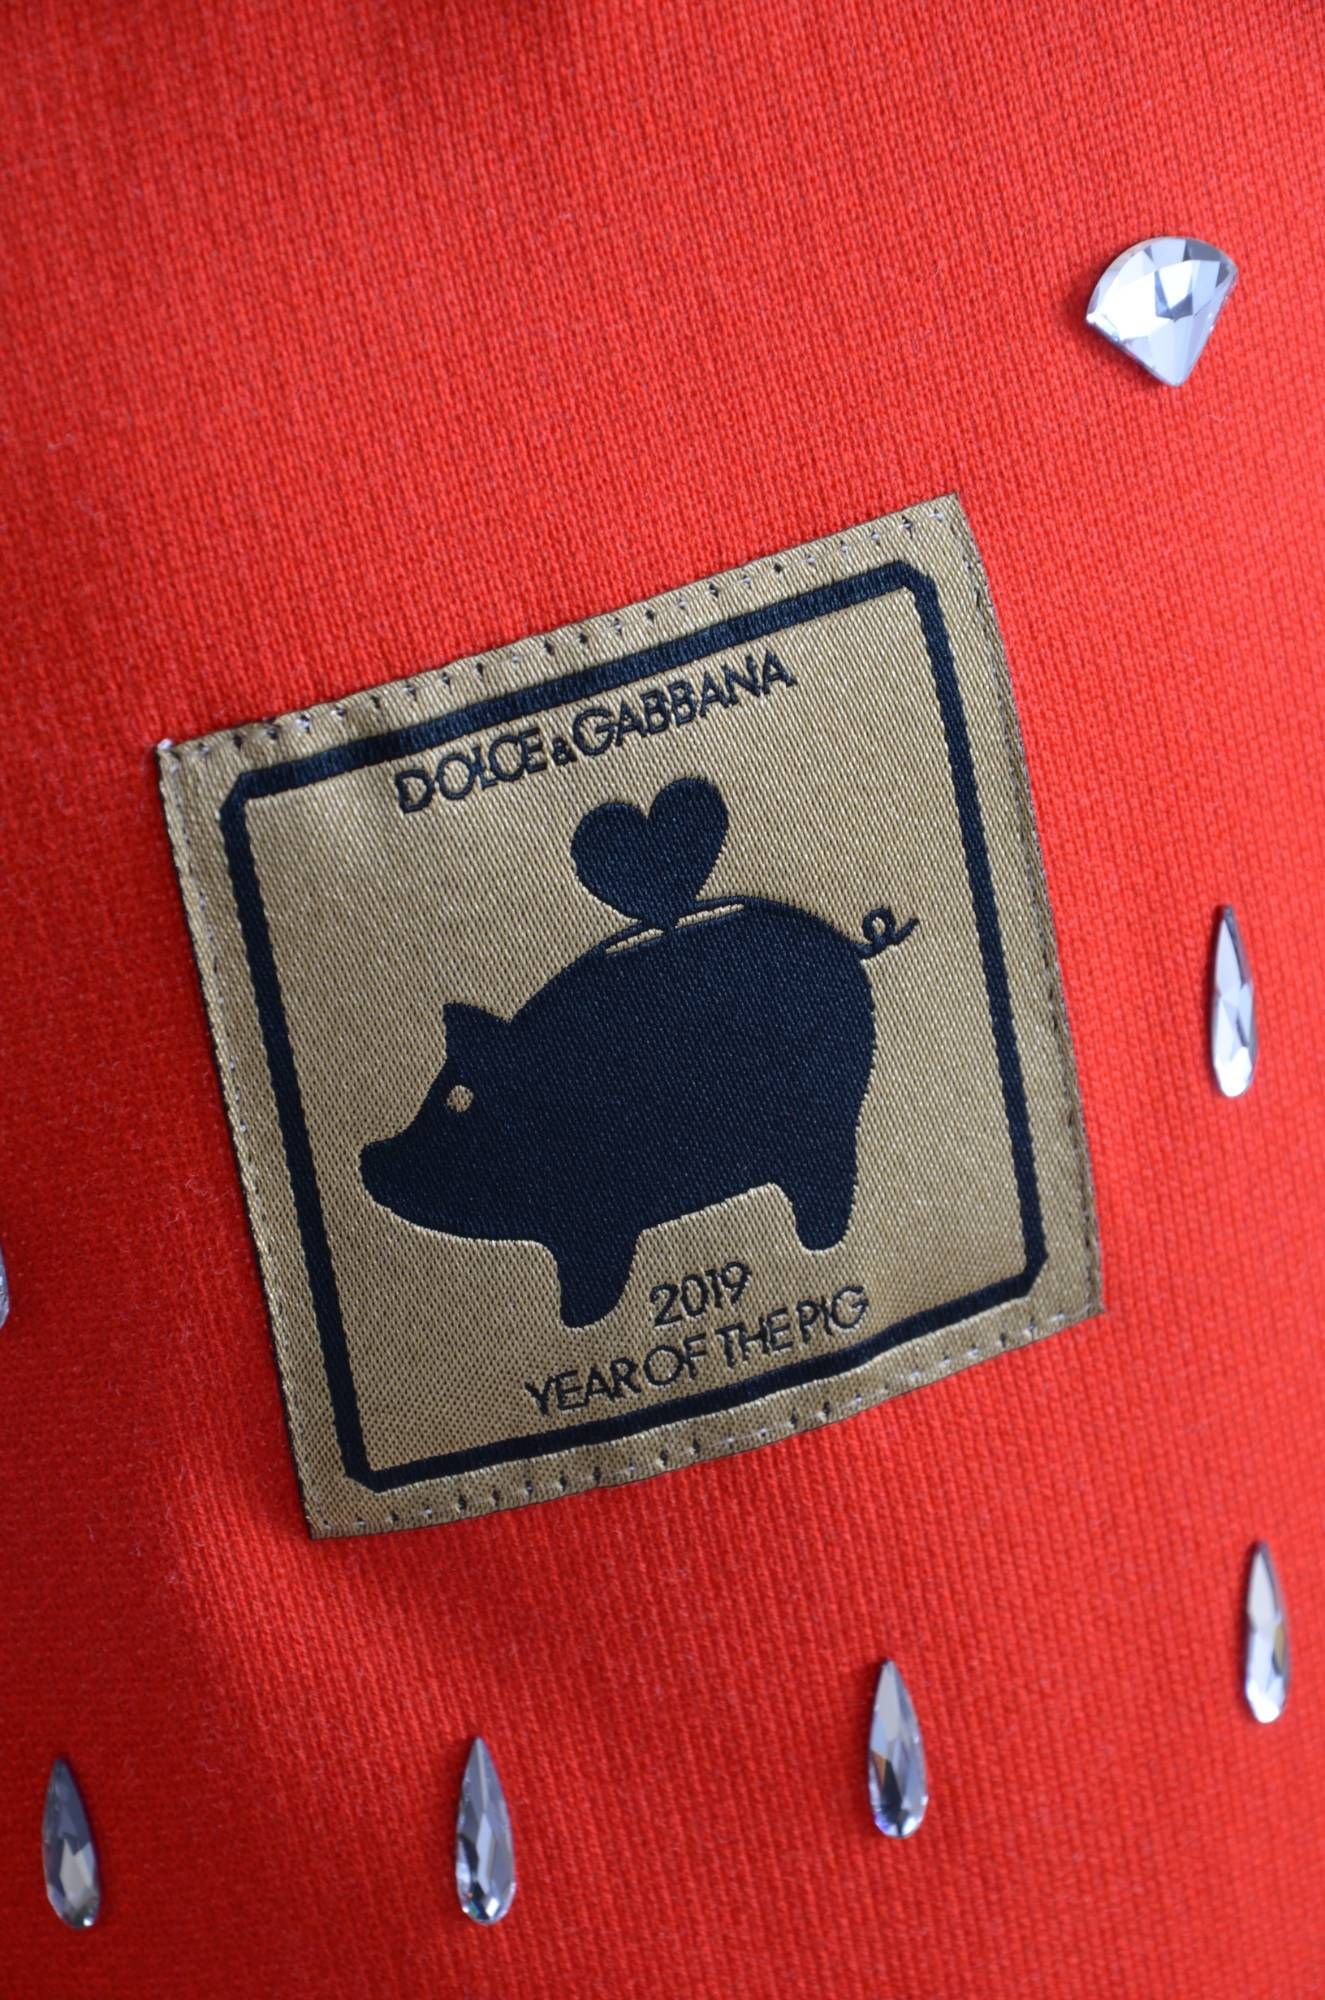 Dolce & Gabbana Men Sport Trousers
Jewels Aplications
Print Pig Piggy Bank